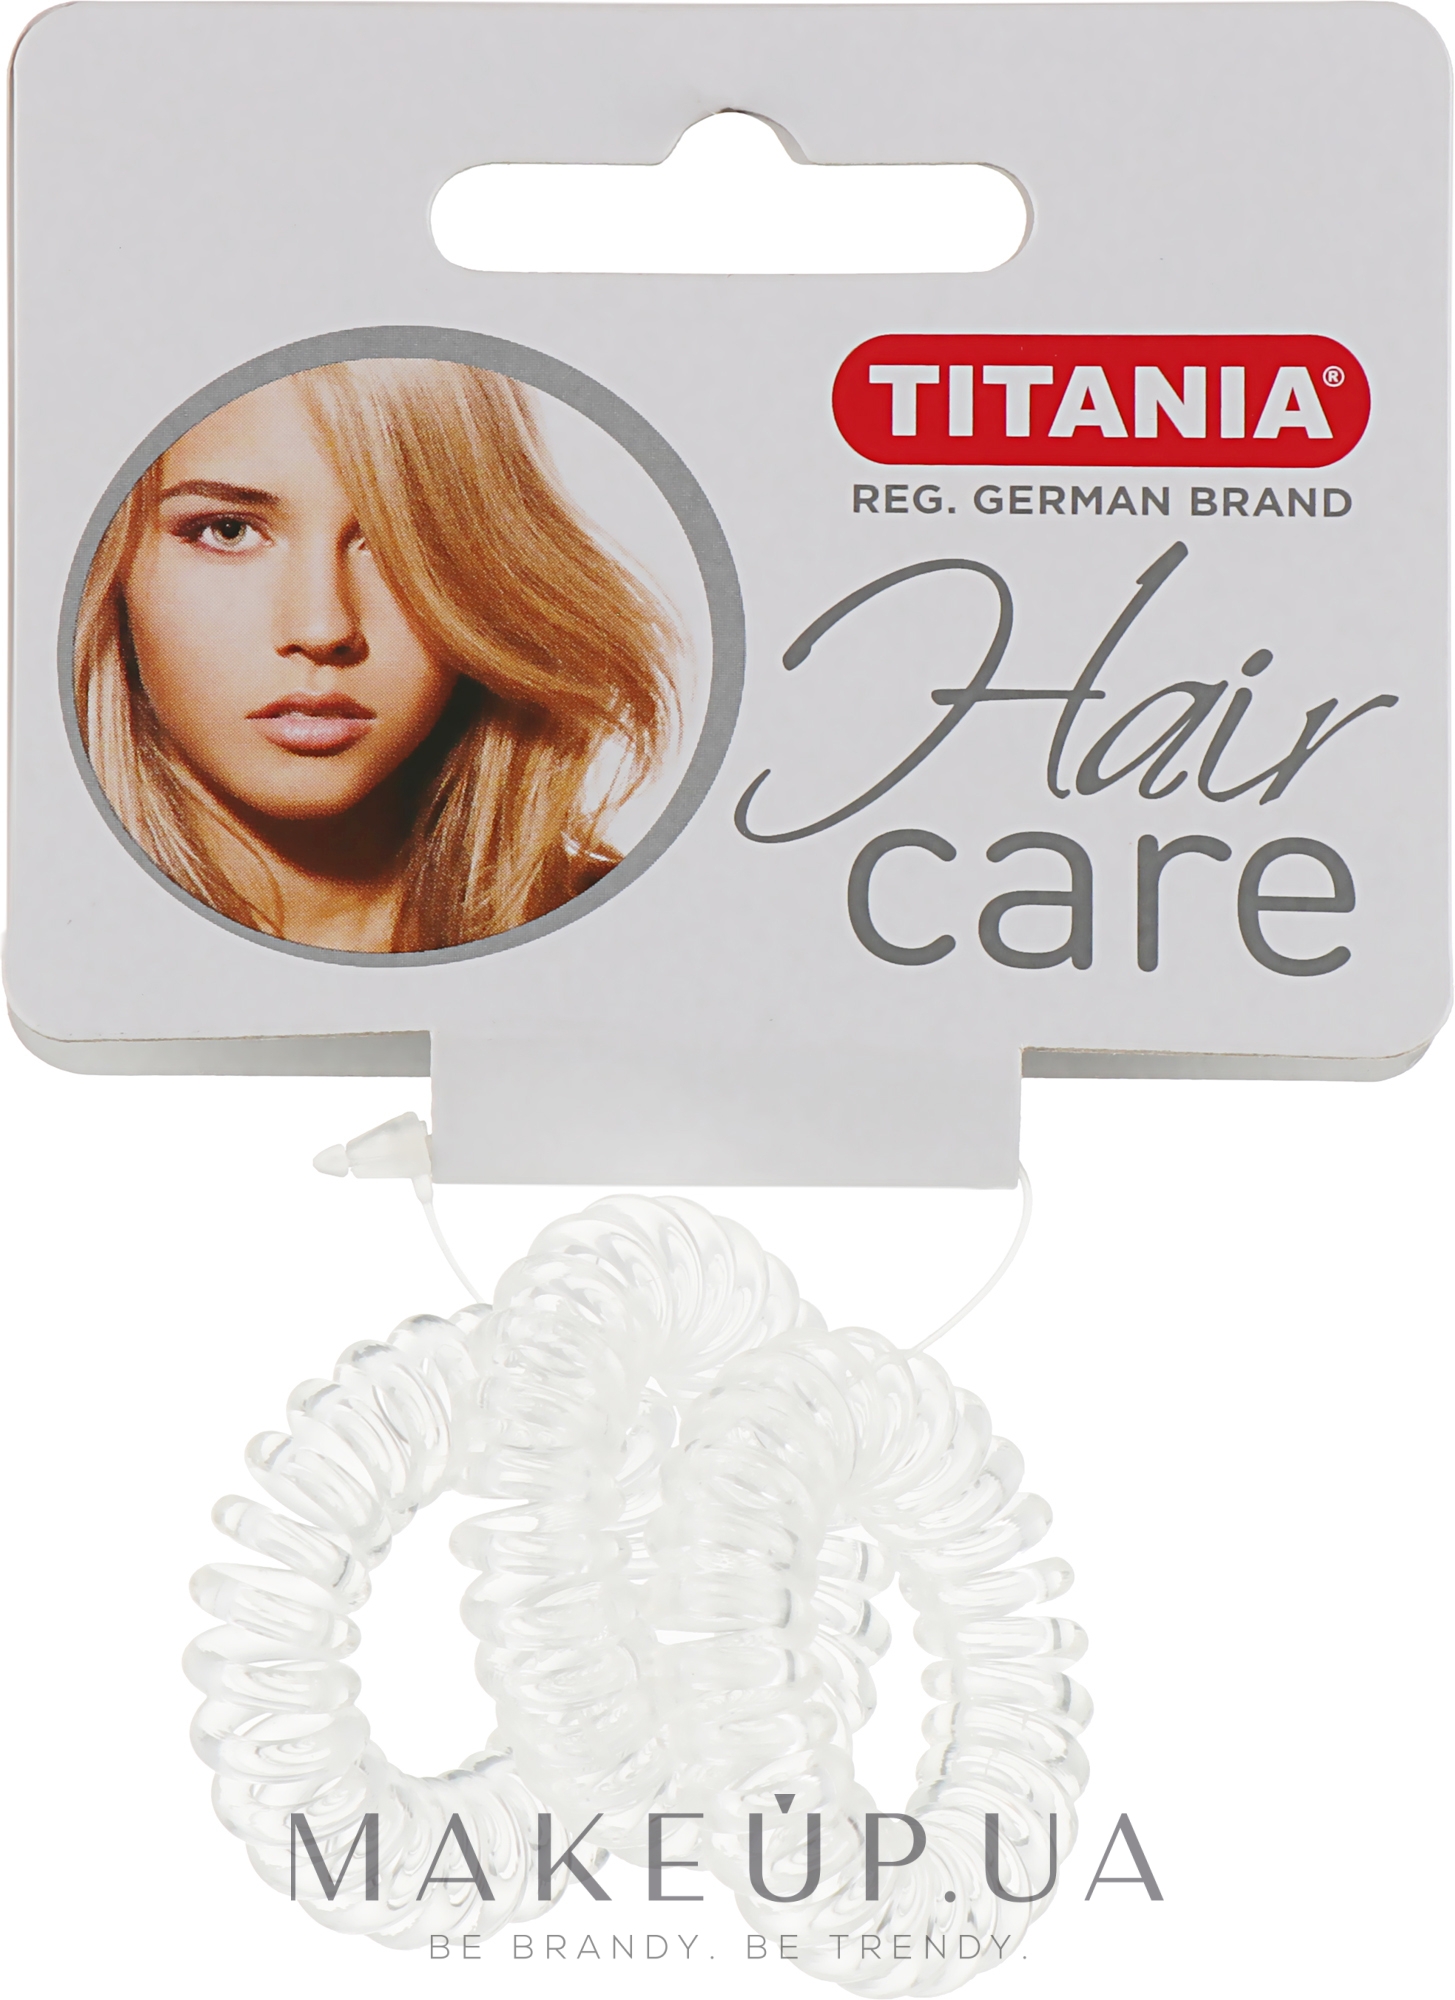 Резинка для волос пластмассовая "Anti Ziep", прозрачная, 3шт, диаметр 2.5см - Titania — фото 3шт